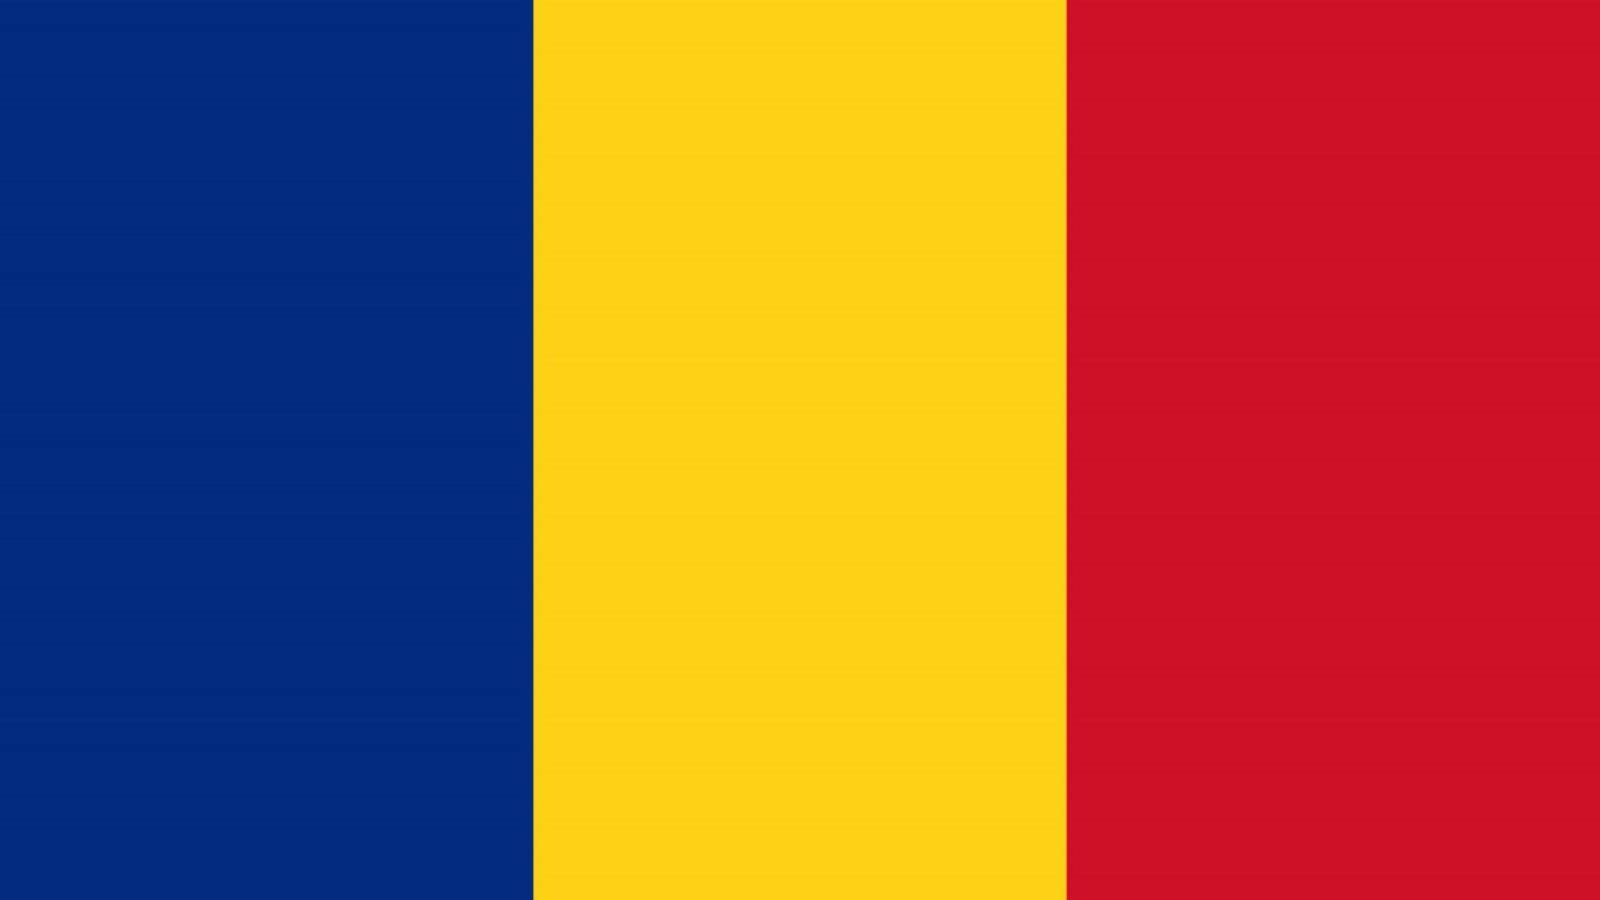 COVID-19 Ratele Incidenta fiecare Judet Romania 6 Ianuarie 2021